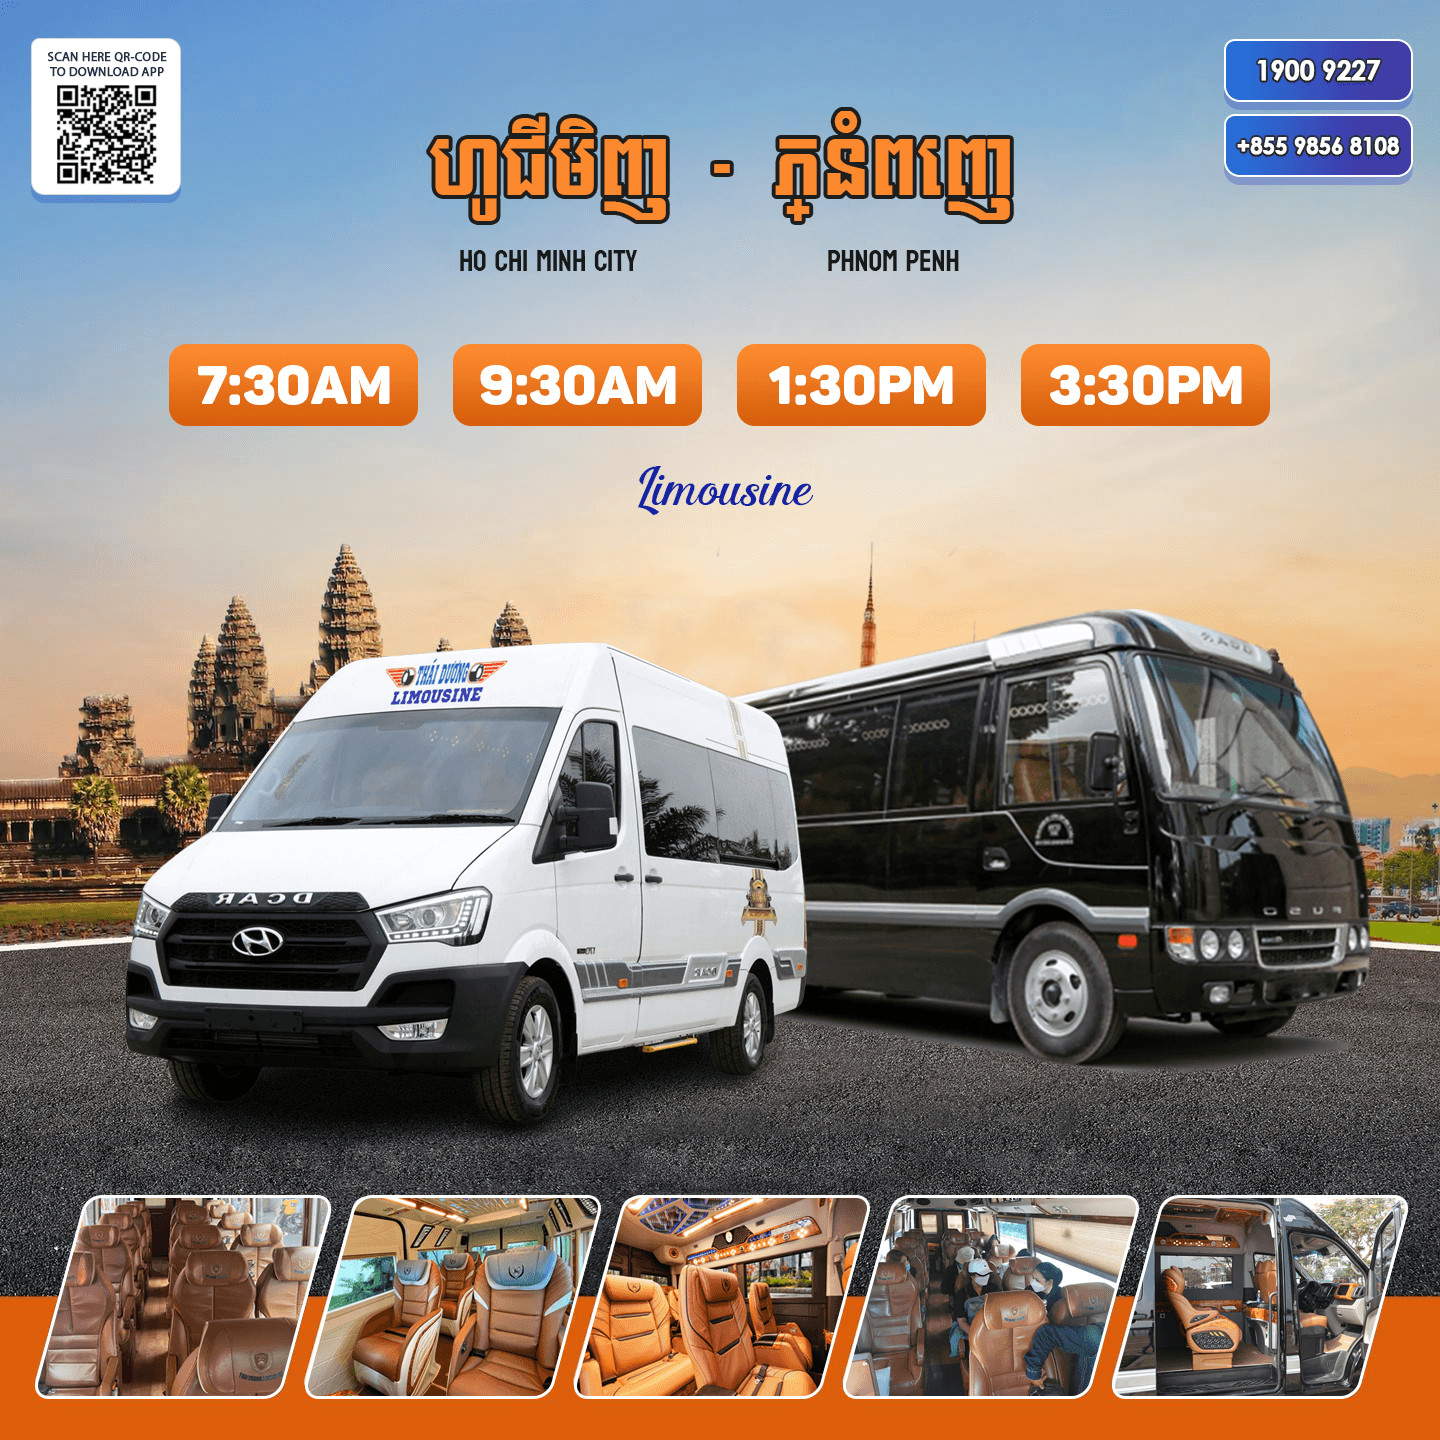 Limousine bus to Phnom Penh